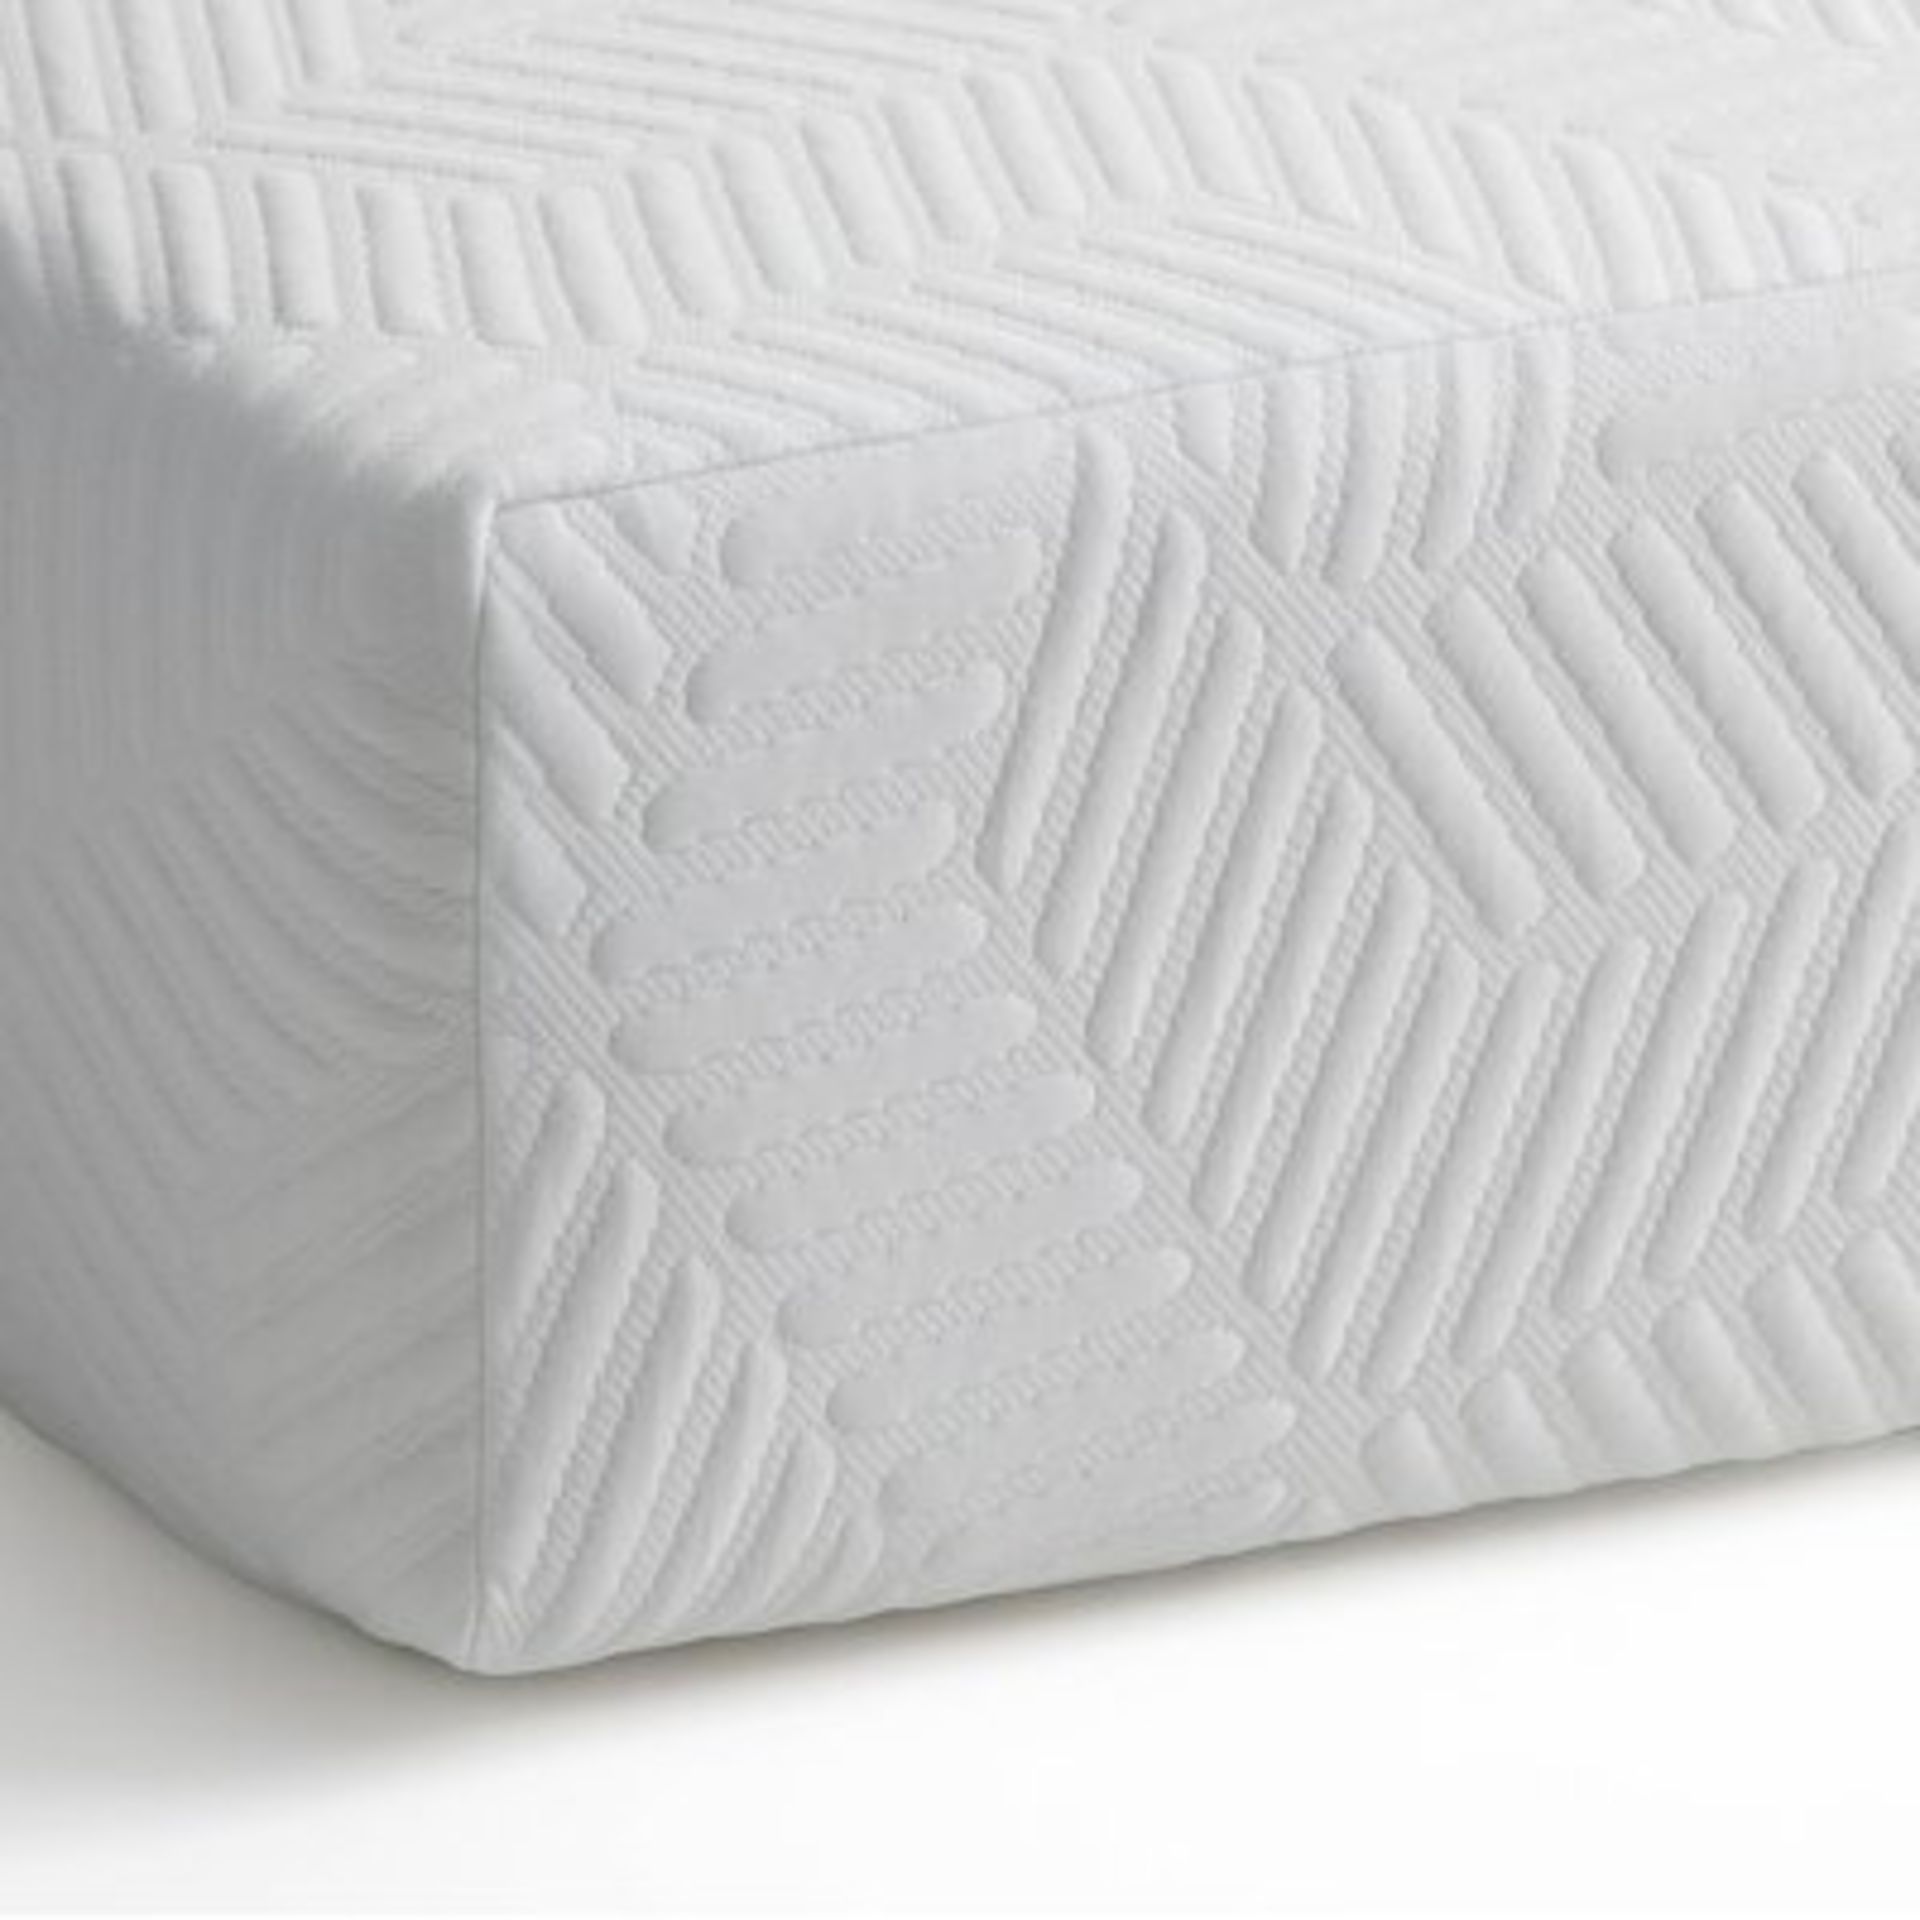 Wyfair Sleep Sleep Memory Foam Mattress. 150x200cm. - Image 3 of 3